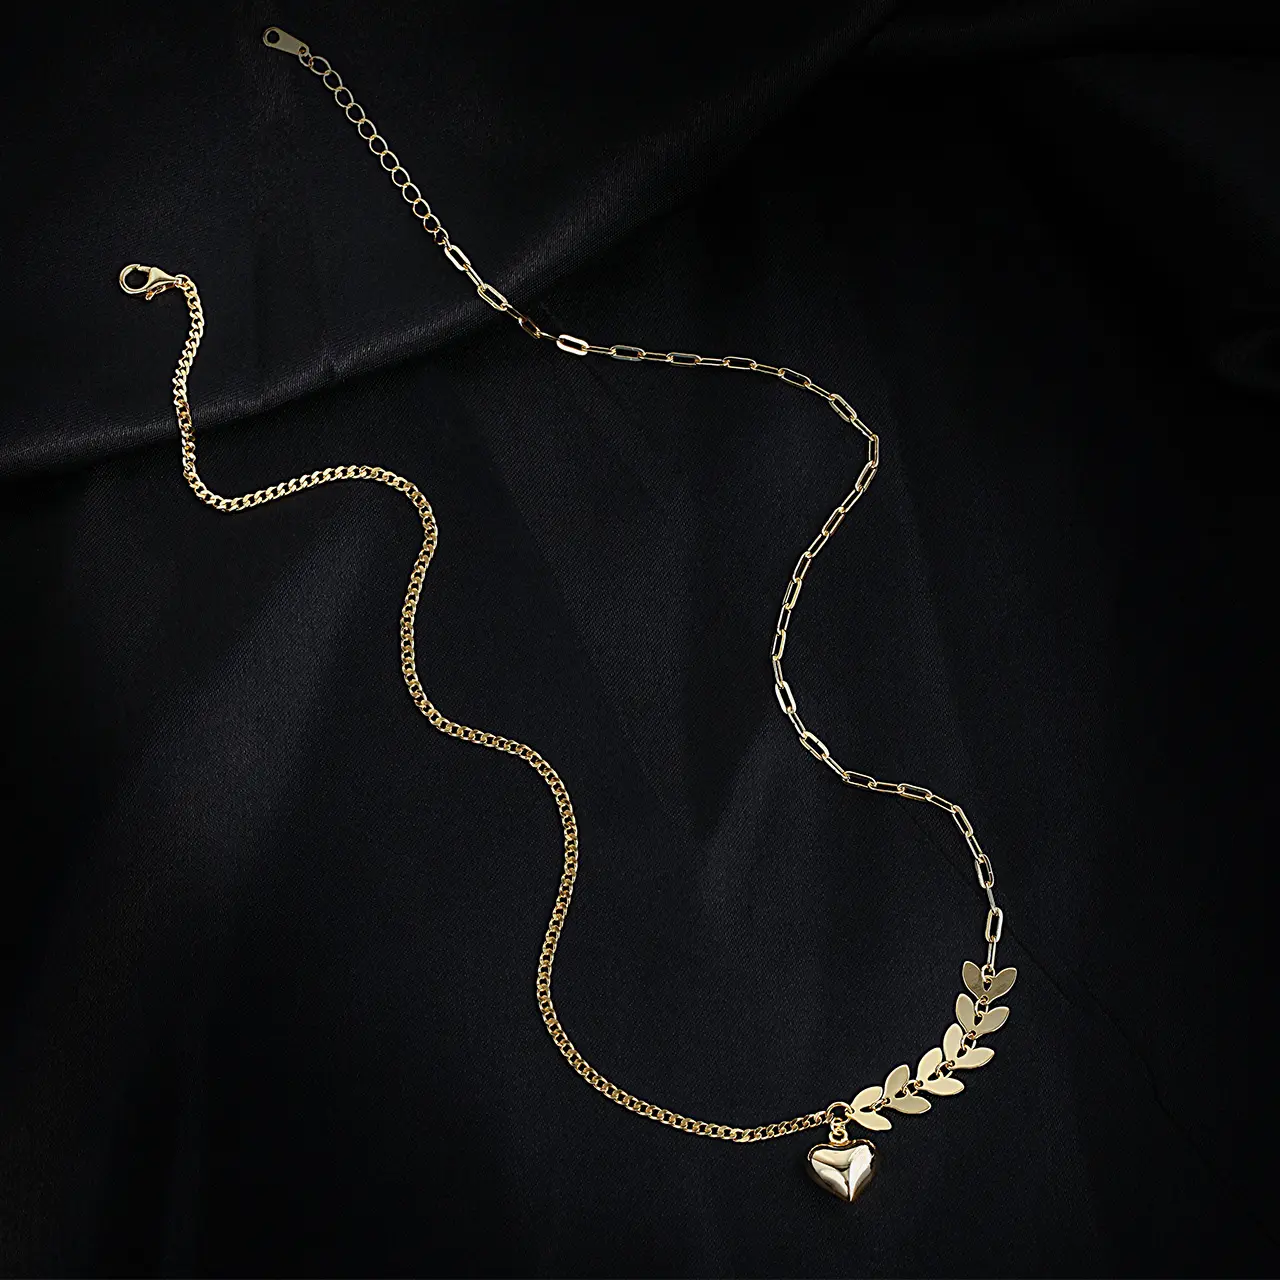 Rainbowking vergoldete halskette 925 sterling silver ear of wheat heart pendant necklace costume jewellery